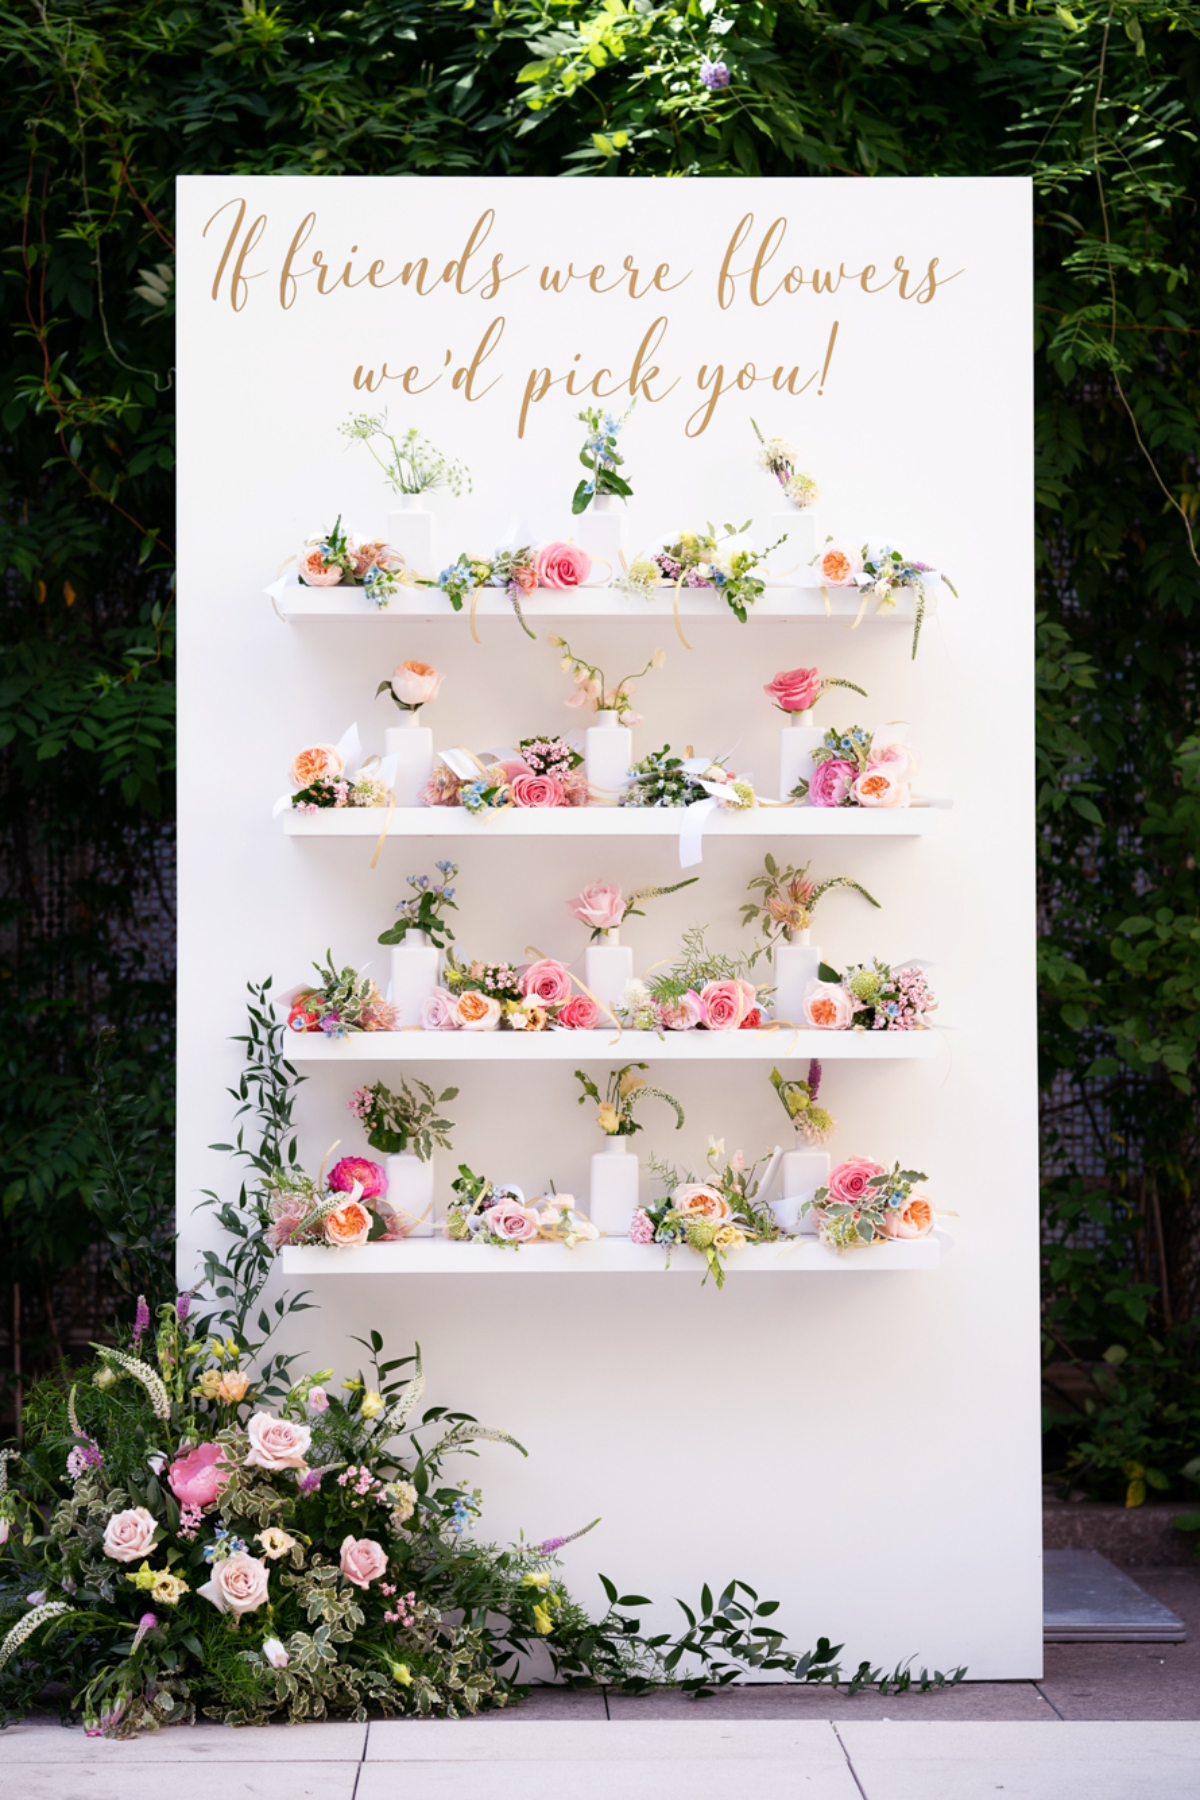 luxury escort display with shelves of flowers